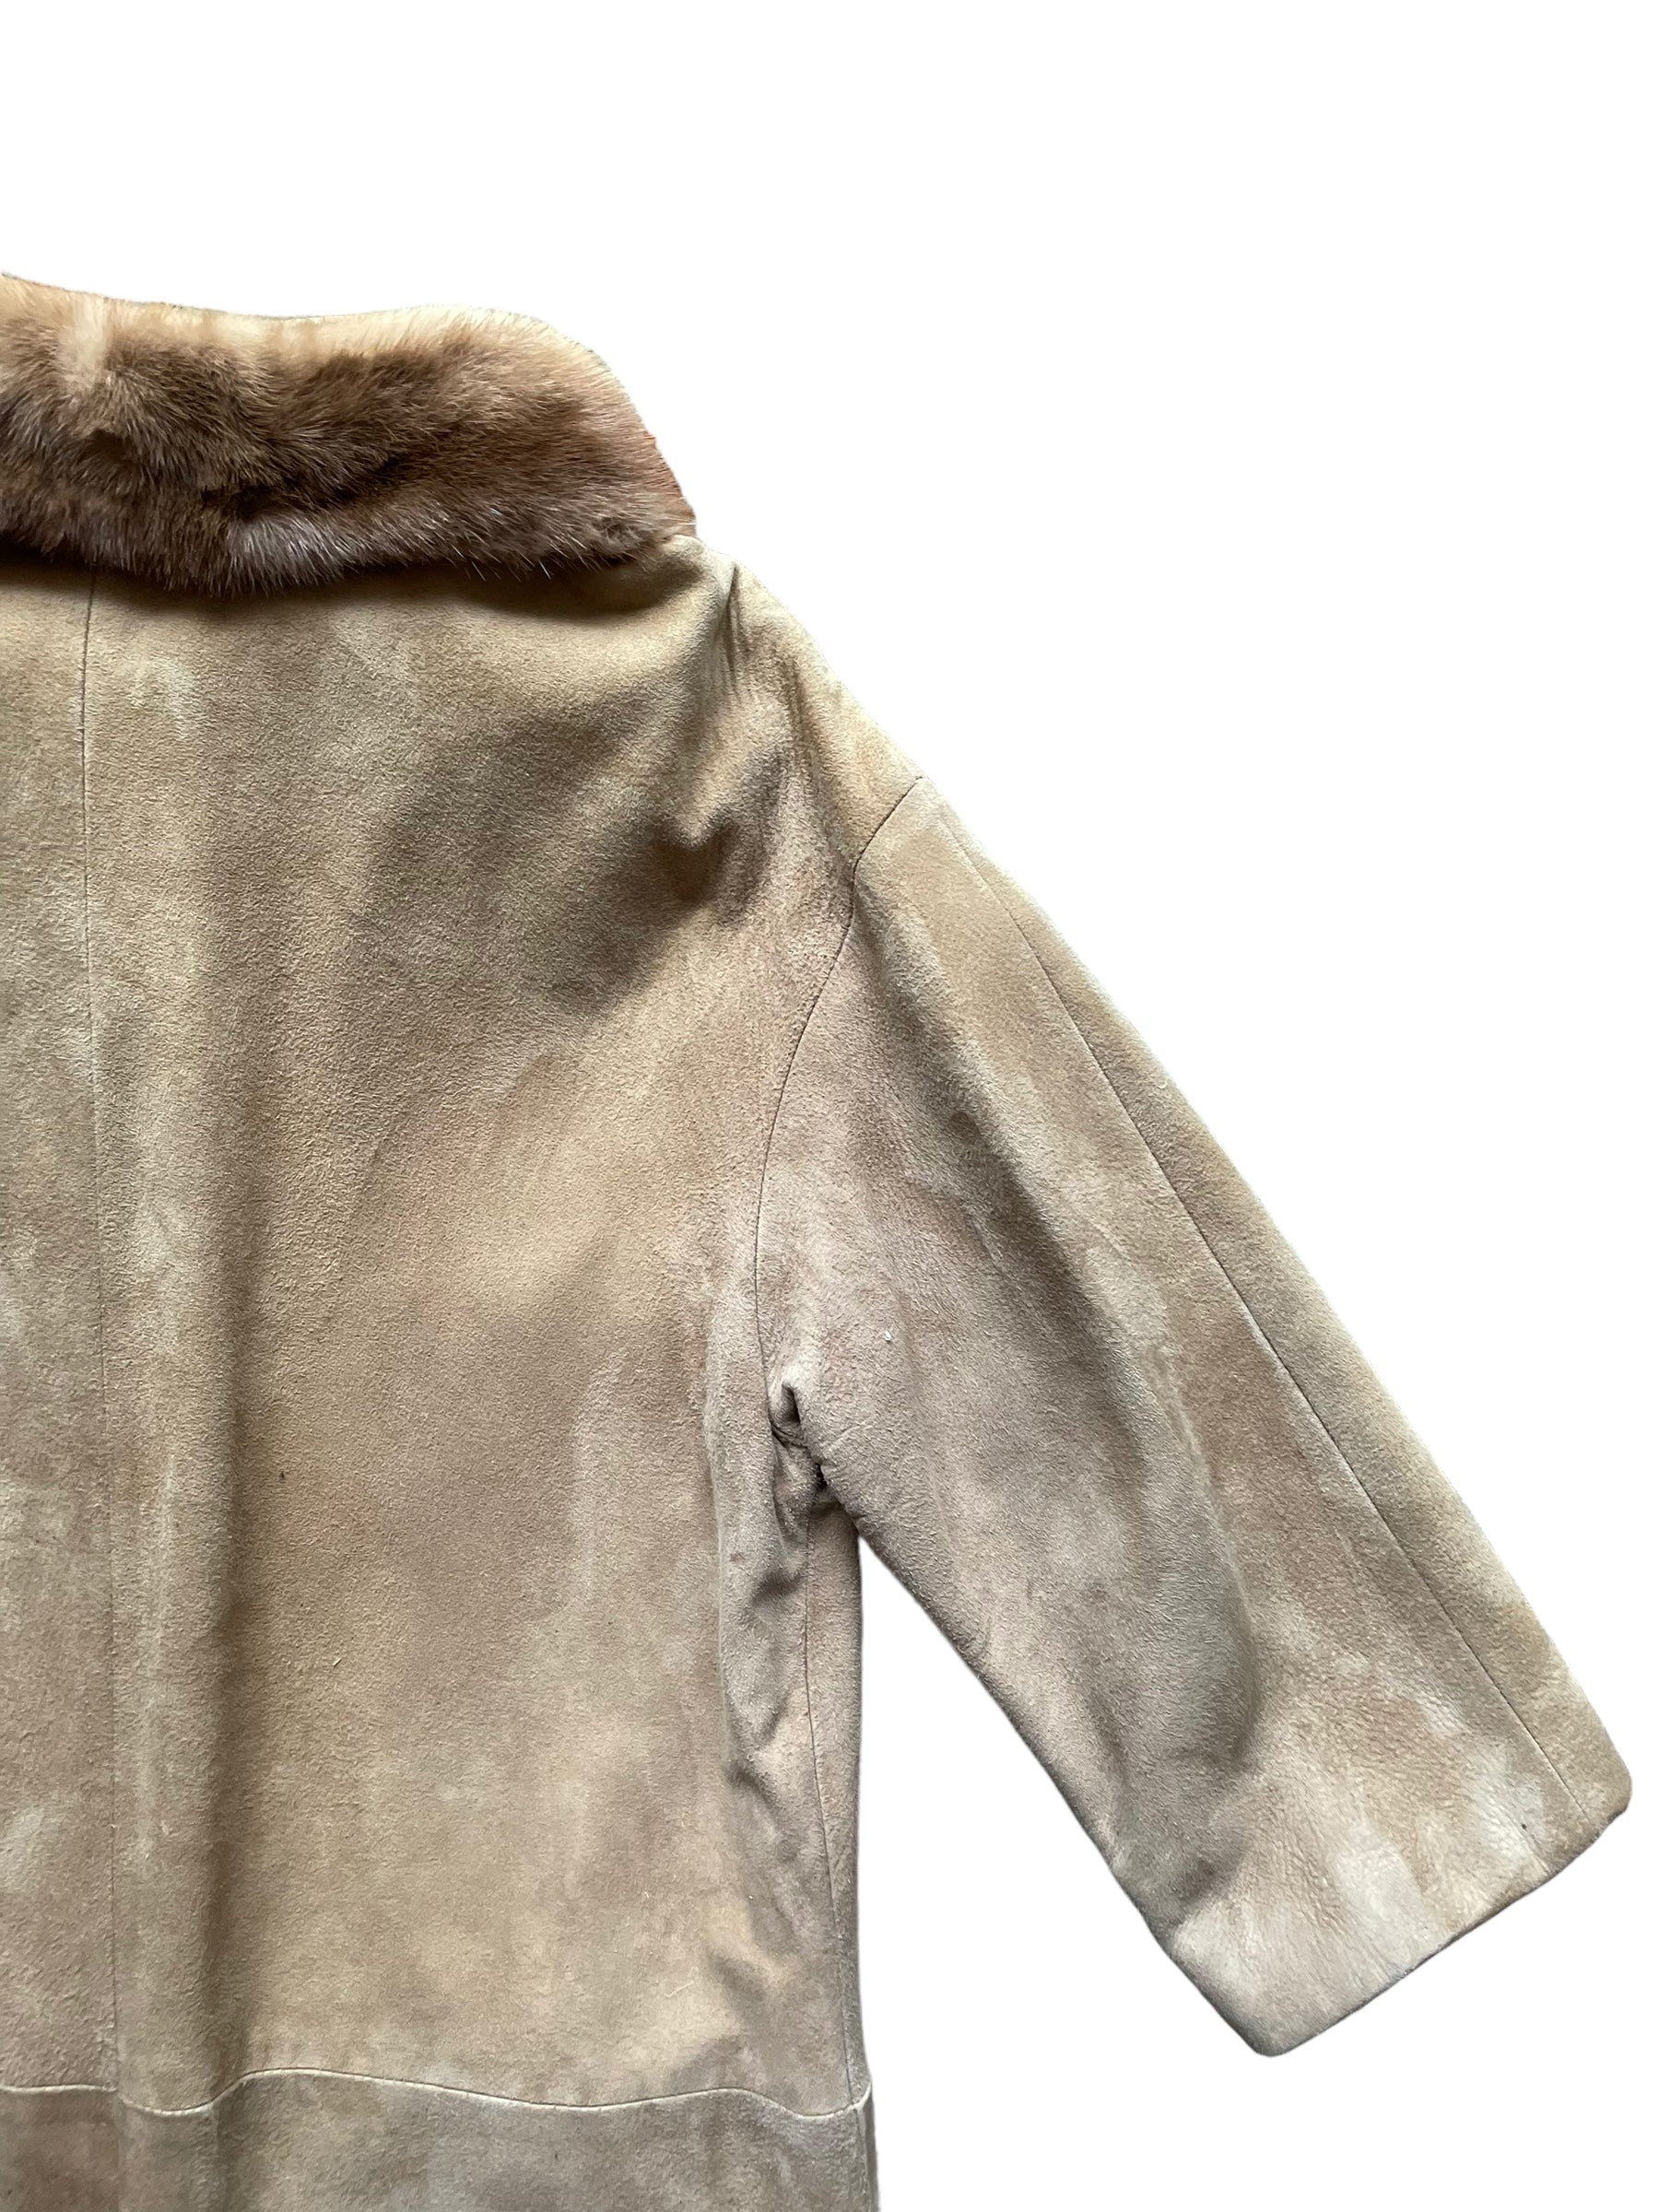 Back right shoulder view of Vintage 1960s Suede Coat with Mink Collar SZ M-L | Seattle True Vintage | Barn Owl Vintage Coats